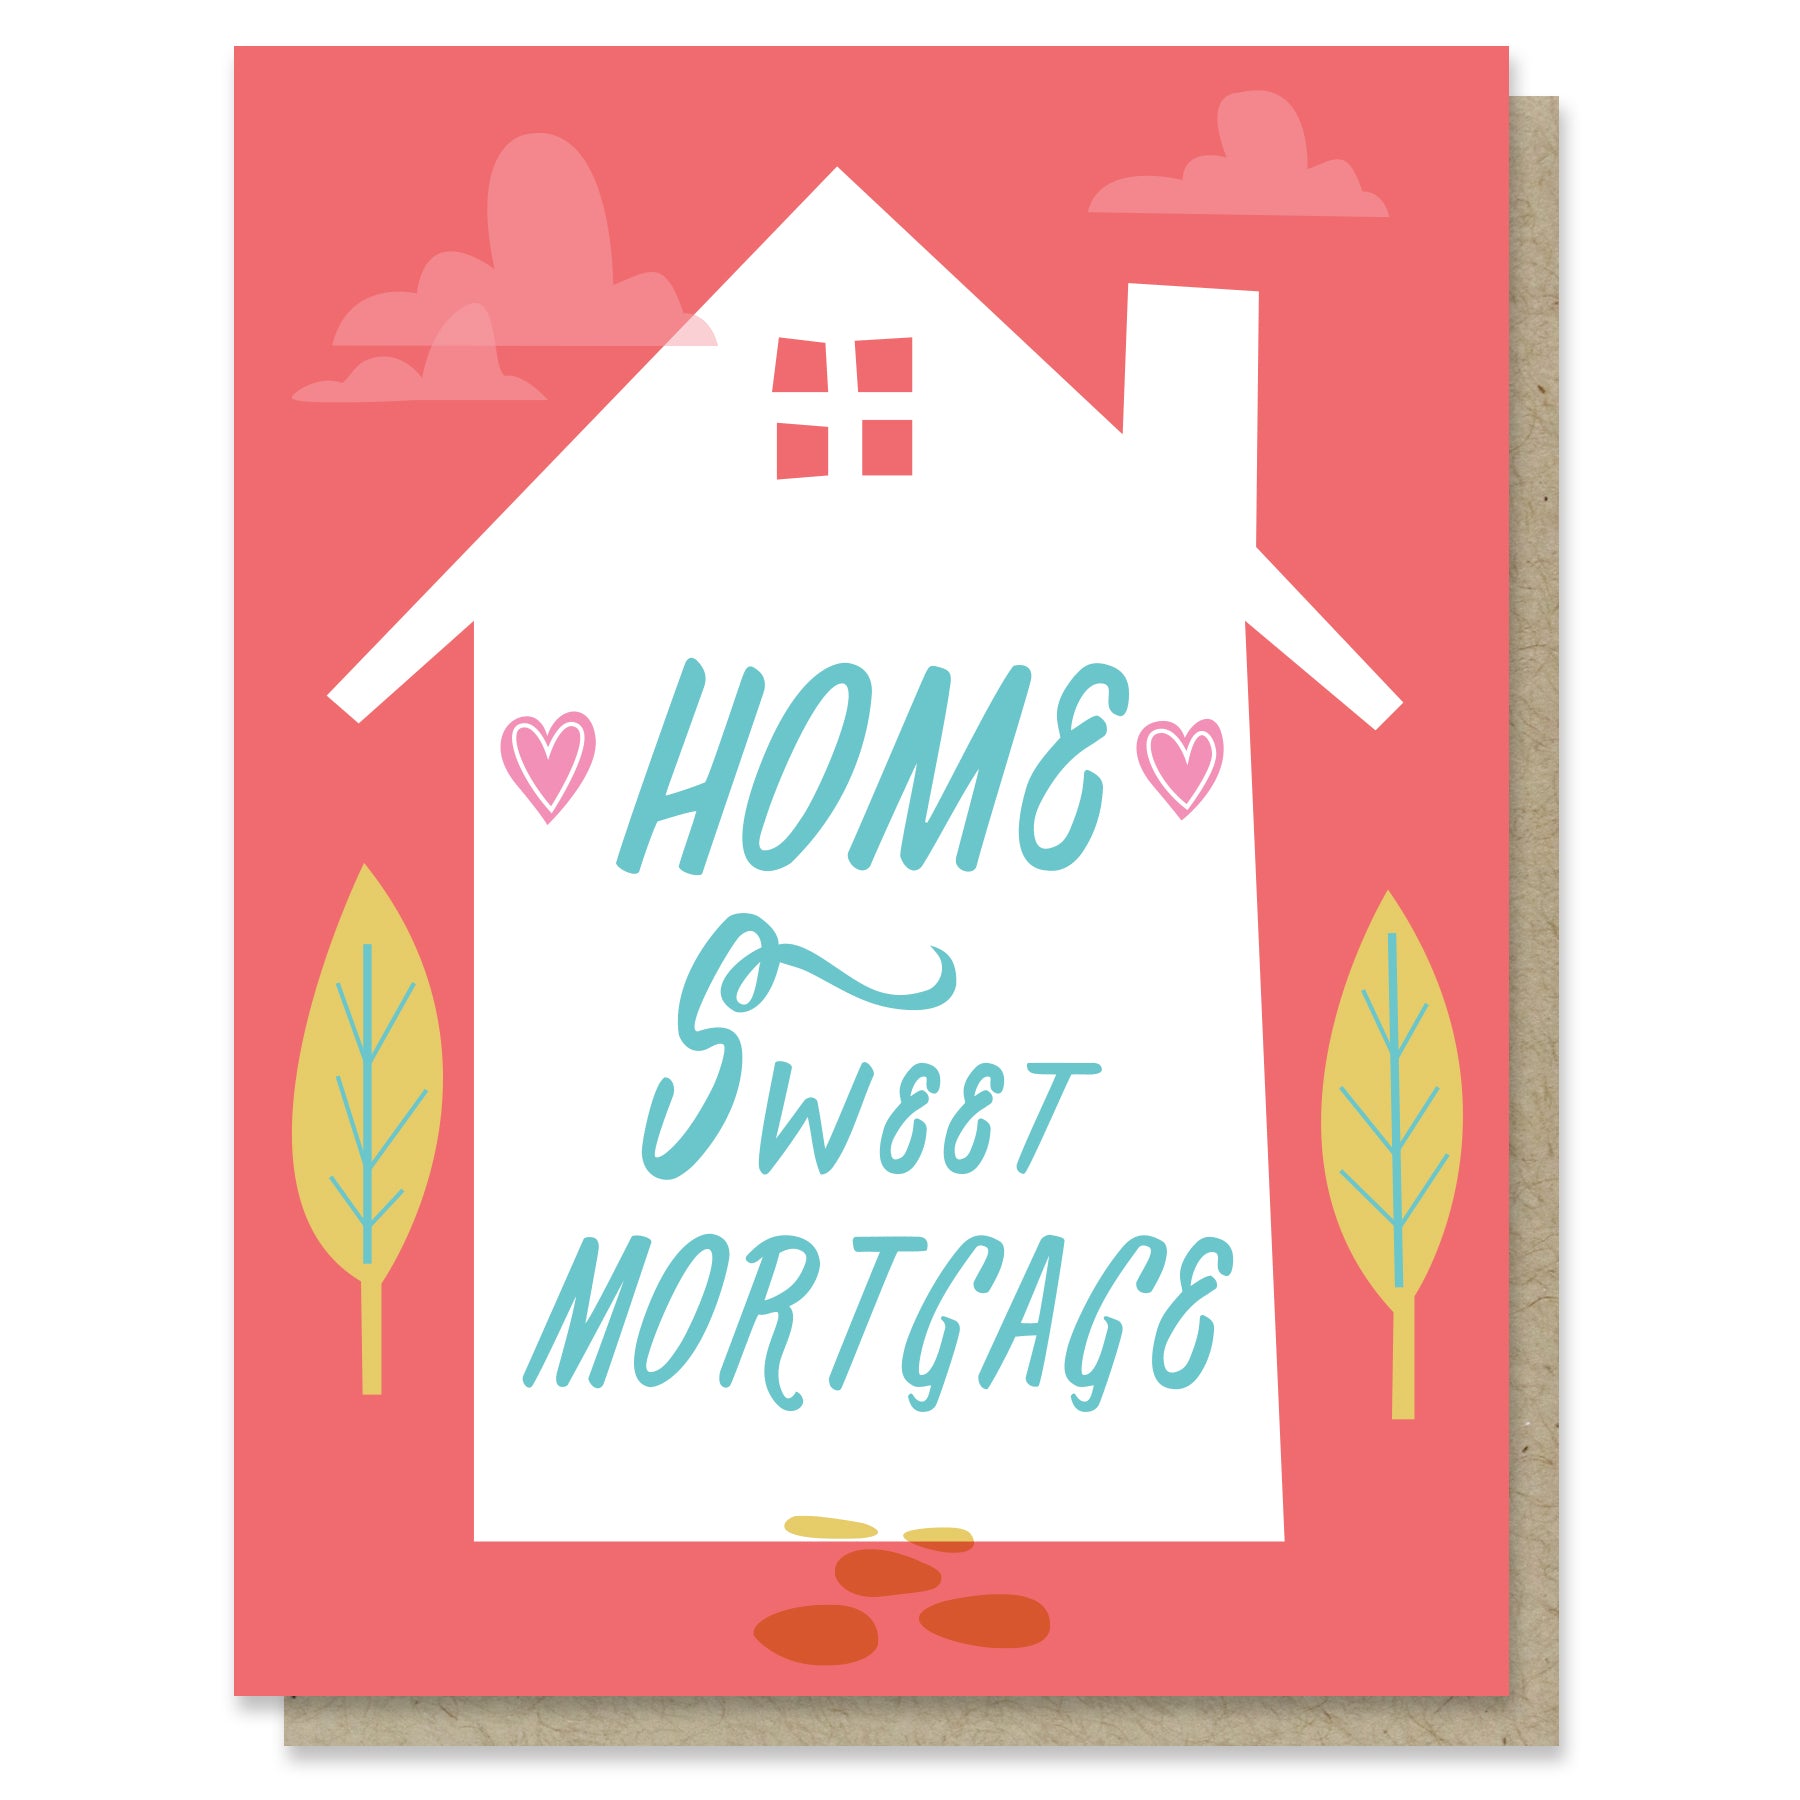 Sweet Mortgage Card